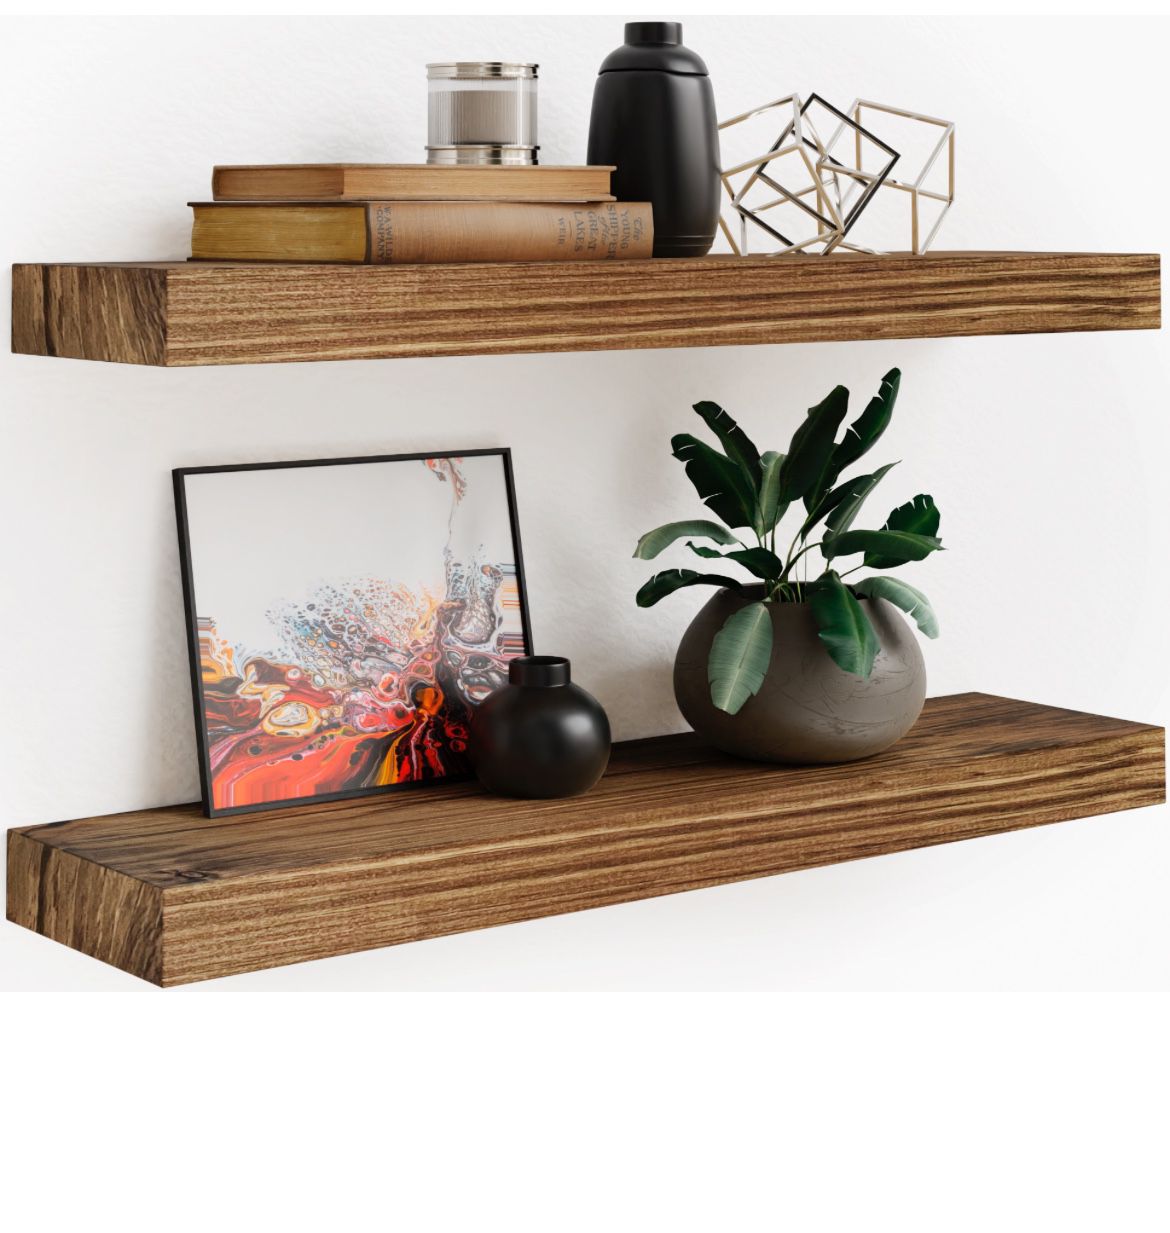 Imperative Décor Floating Shelves Rustic Wood Wall Shelf | Set of 2 (Dark Walnut,